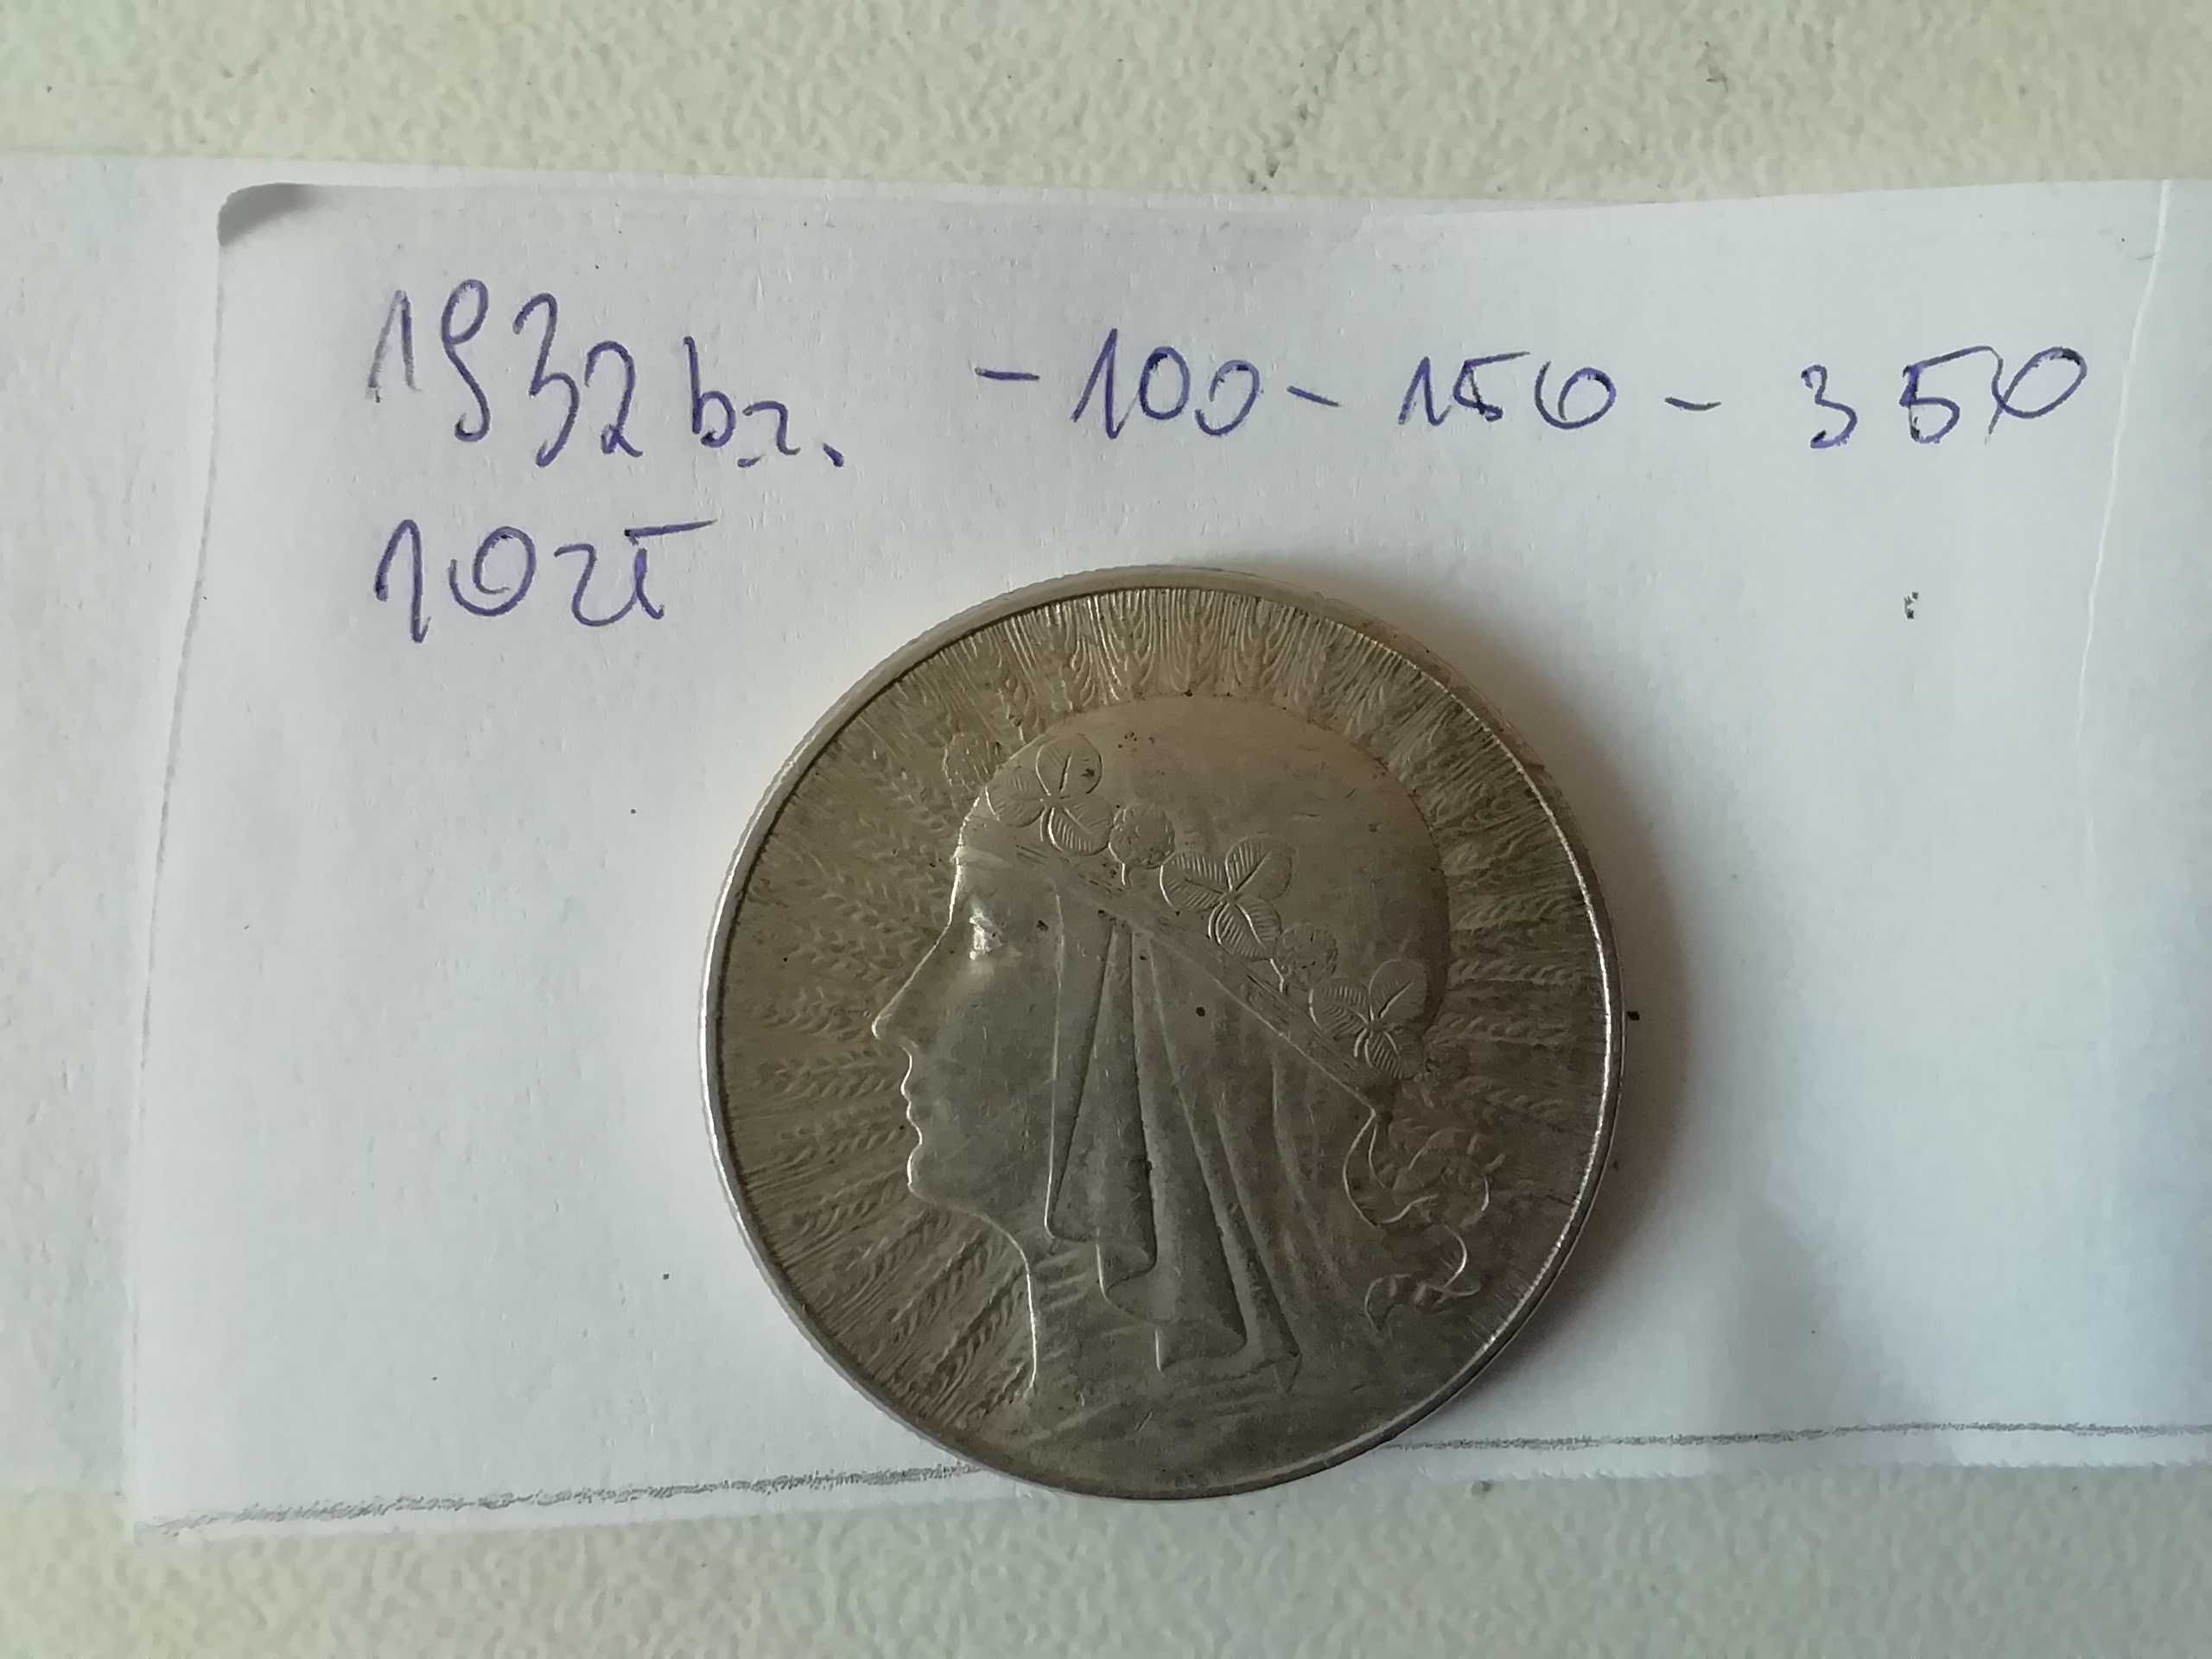 Moneta 10 zł. Polska z 1932 r. srebro stan dobry